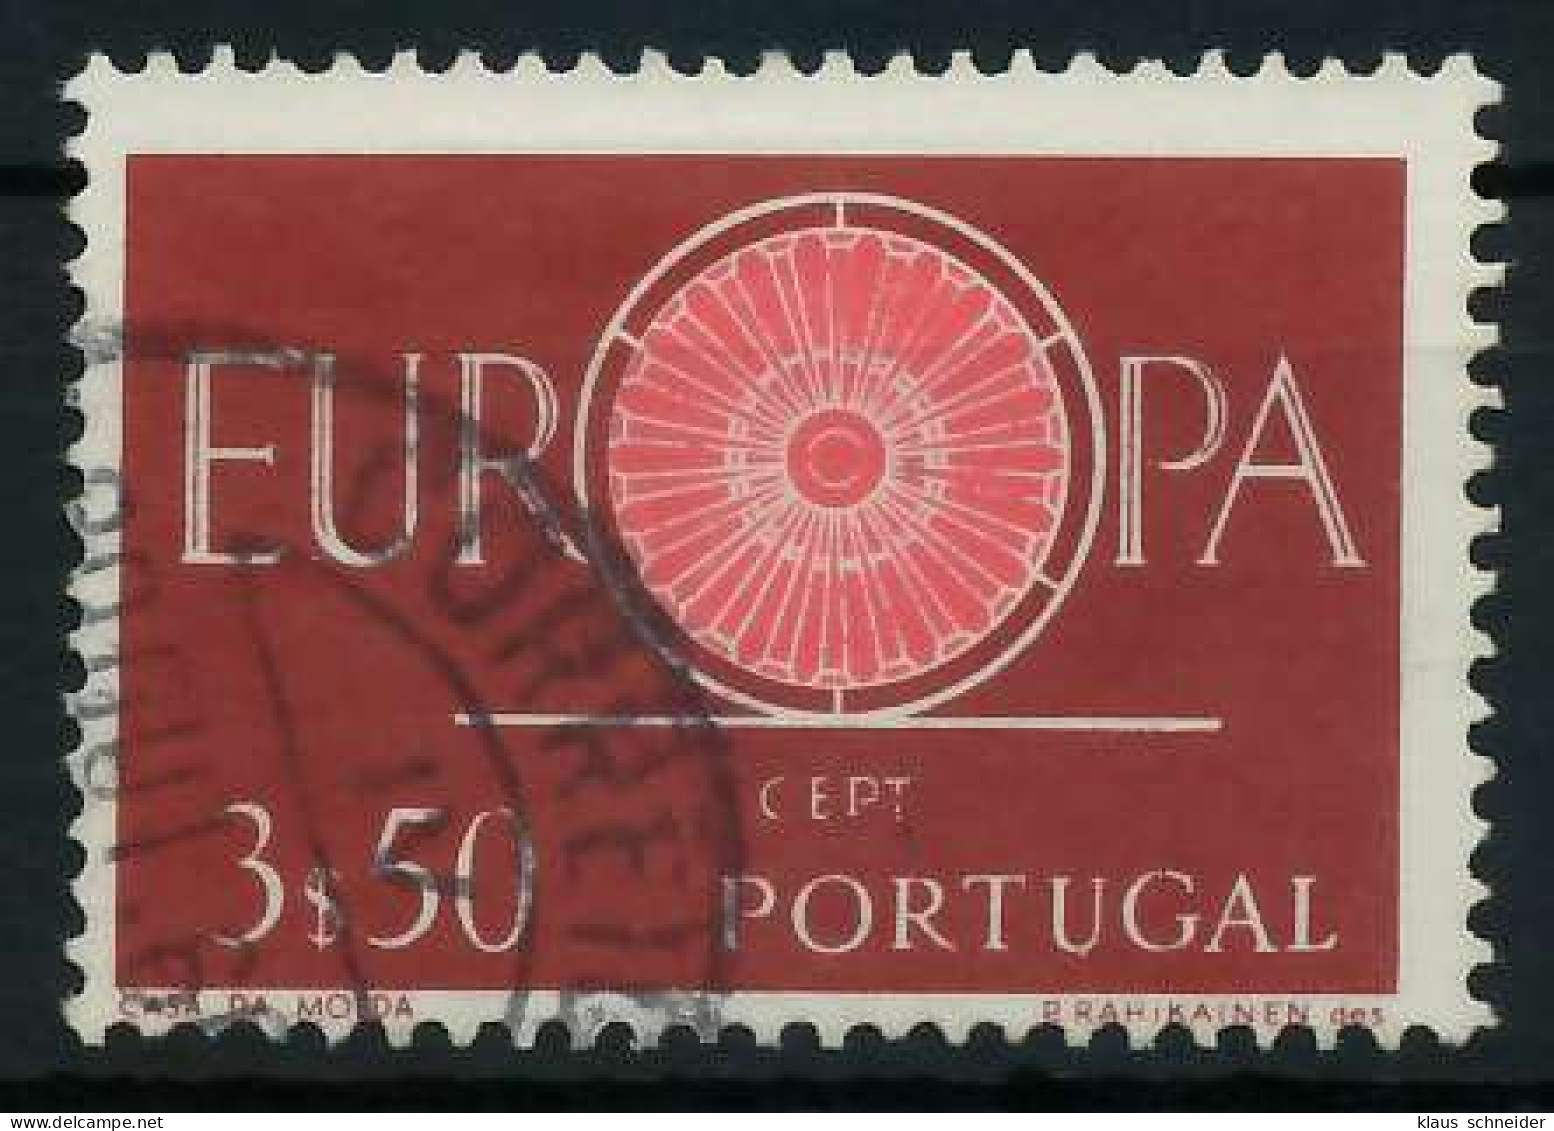 PORTUGAL 1960 Nr 899 Gestempelt X9A2E2A - Oblitérés